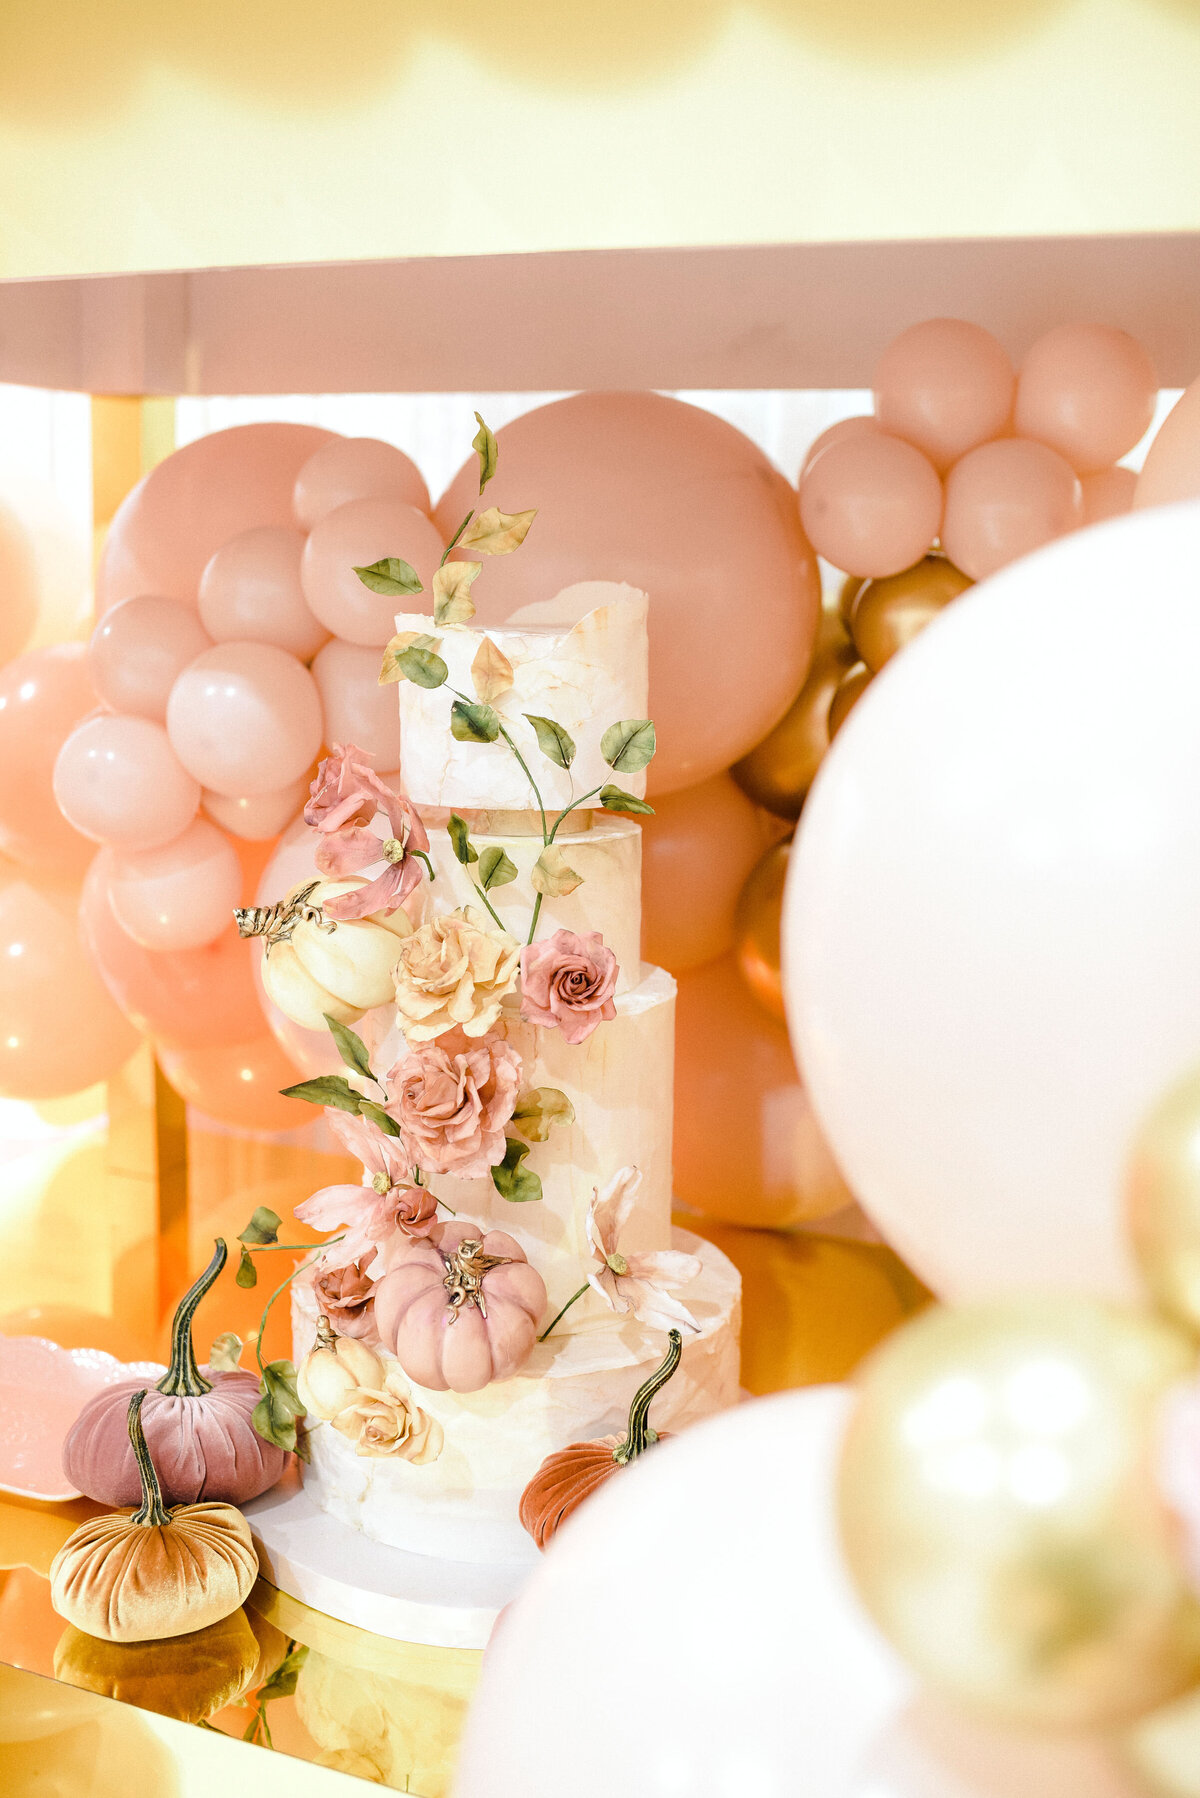 Jayne Heir Weddings and Events - Washington DC Metropolitan Area Wedding and Event Planner - Modern, Stylish, Custom, Top, Best Photo - 14